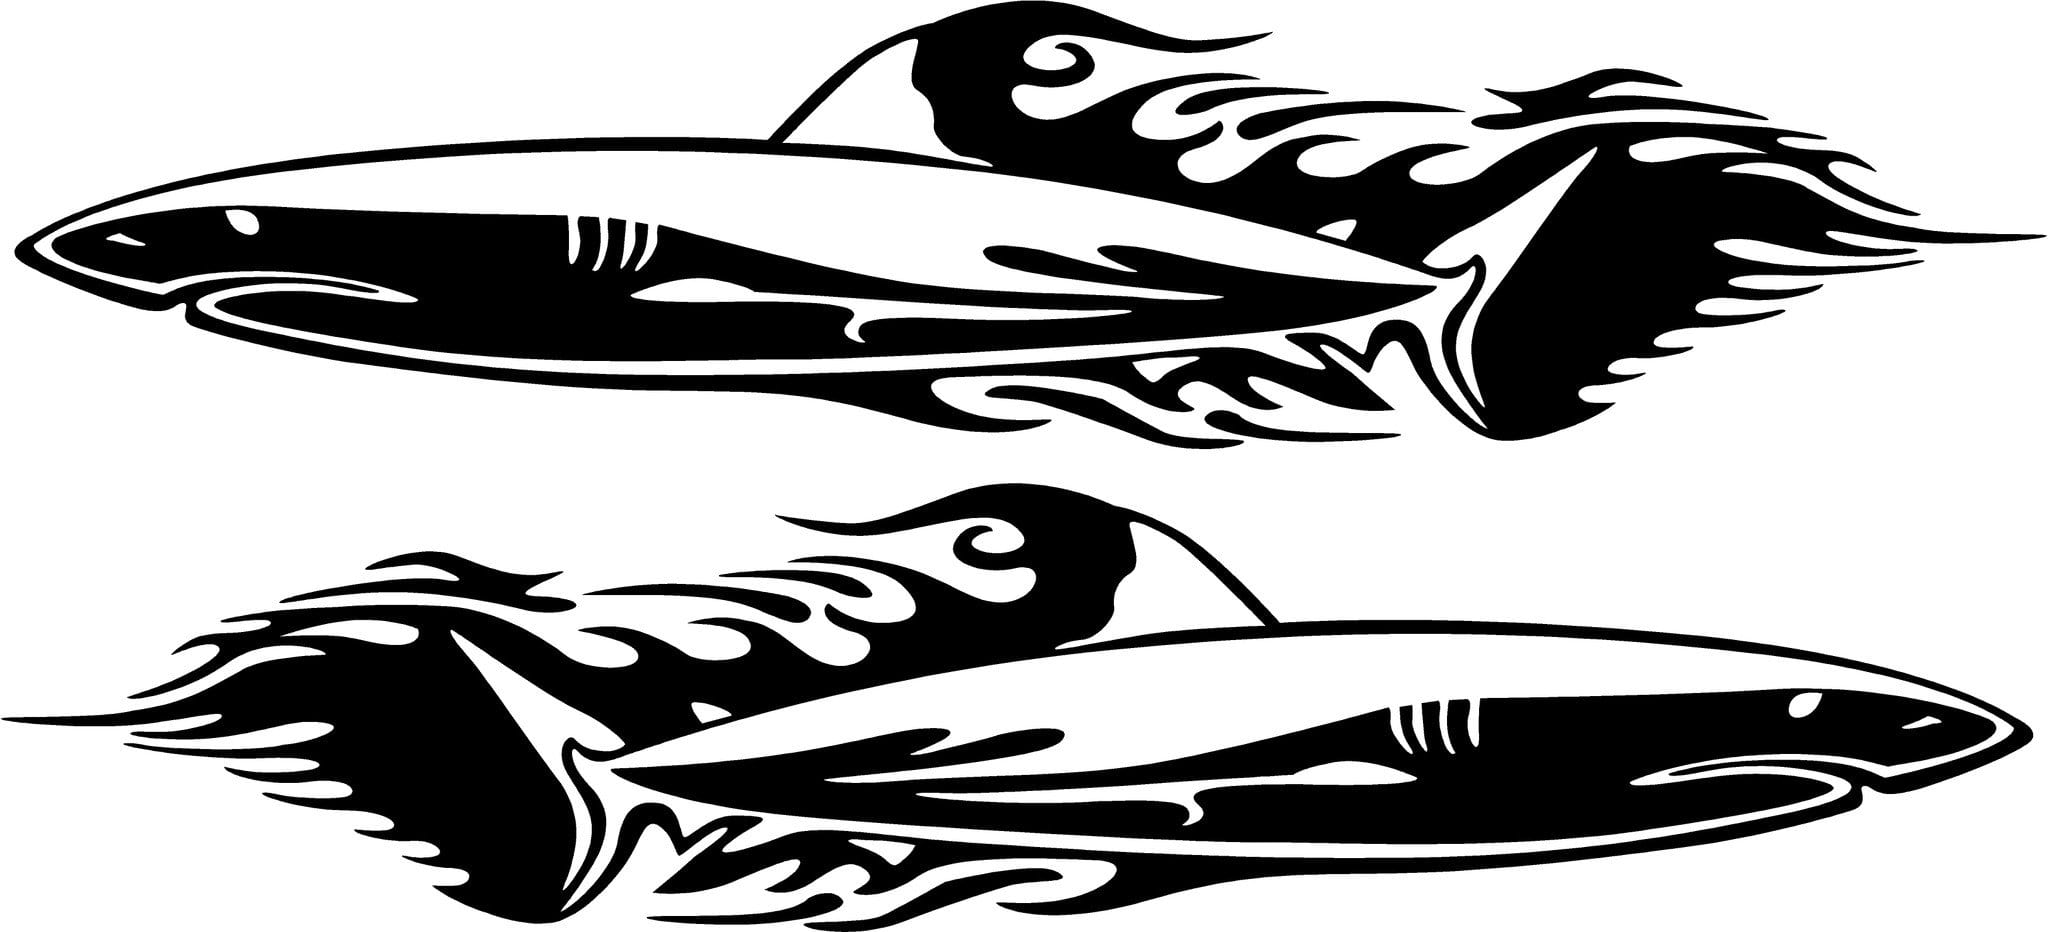 Monster fishbones vinyl cut boat decals  Xtreme digital graphiX - Xtreme  Digital GraphiX